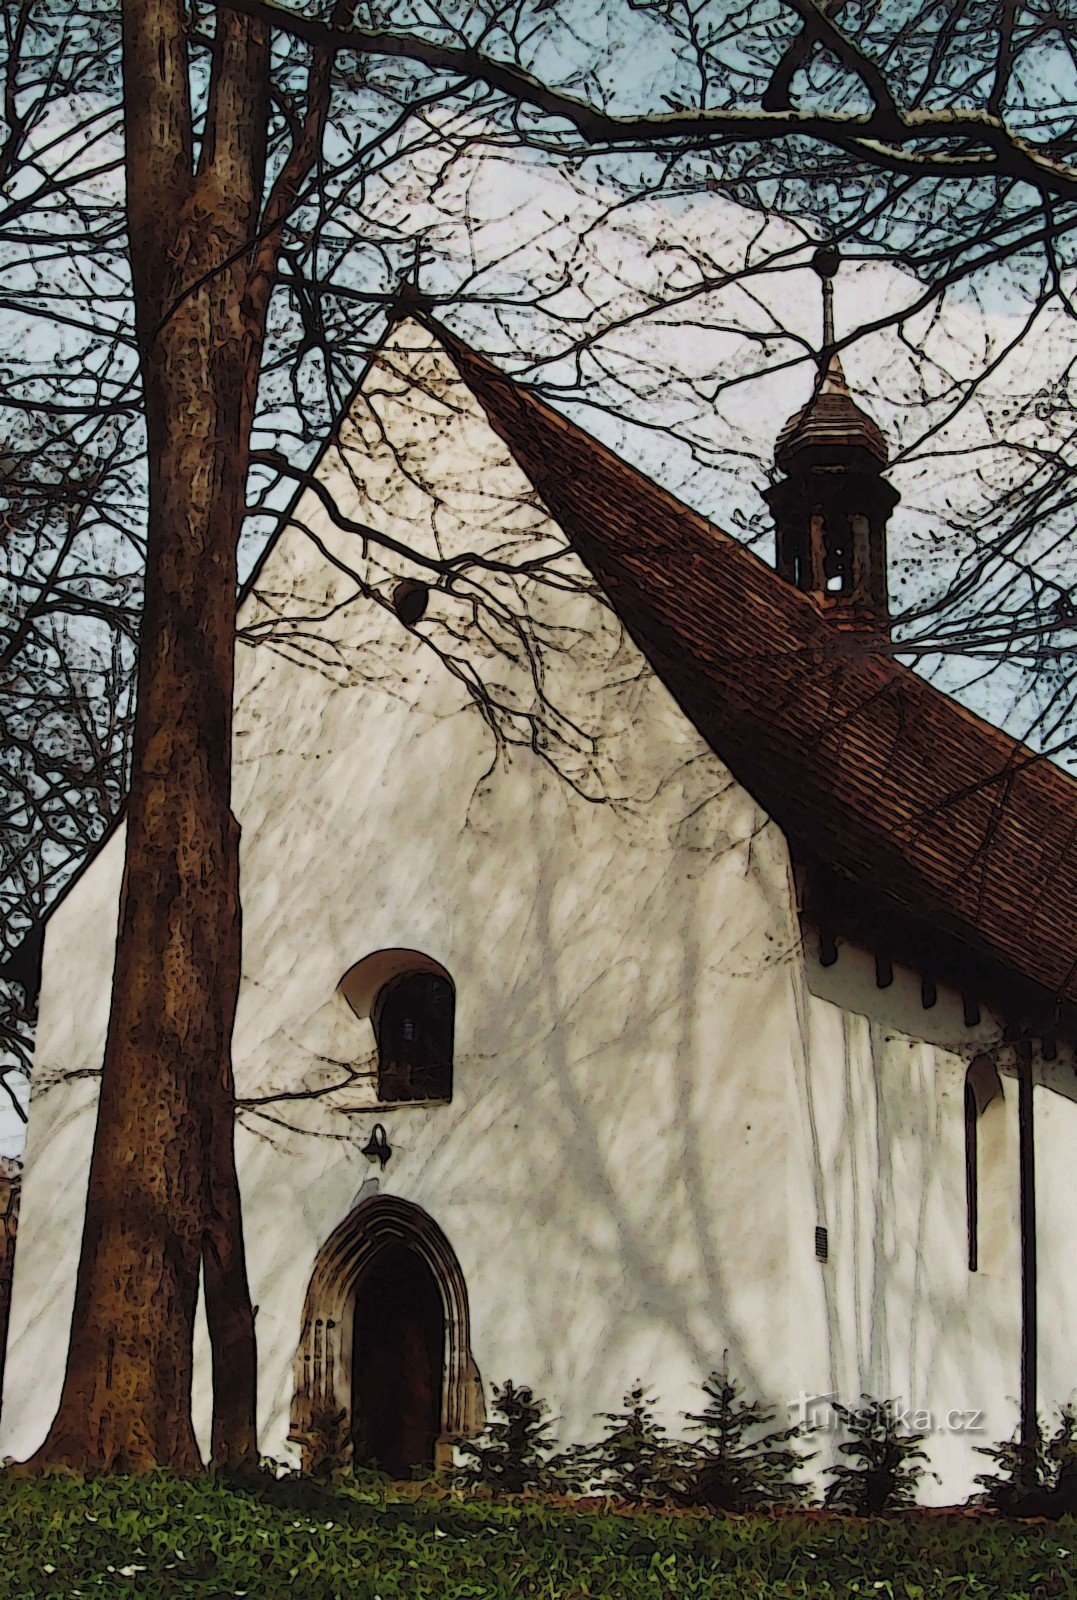 Valašské Meziříčí - De prachtige kerk van St. James